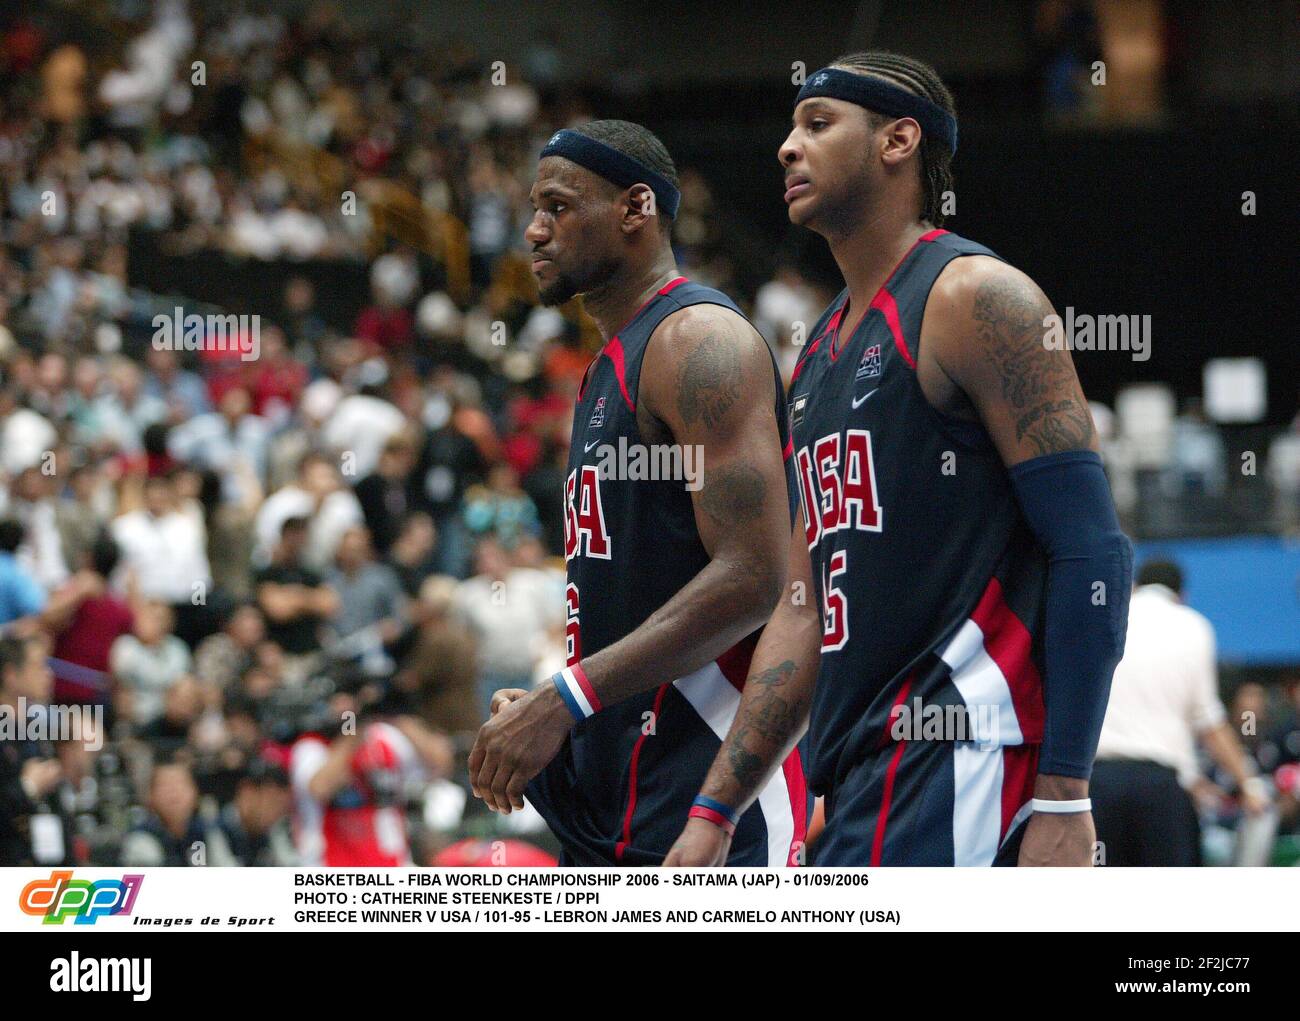 BASKETBALL - FIBA-WELTMEISTERSCHAFT 2006 - SAITAMA (JAP) - 01/09/2006 FOTO  : CATHERINE STEENKESTE / DPPI GRIECHENLAND SIEGER V USA / 101-95 - LEBRON  JAMES UND CARMELO ANTHONY (USA Stockfotografie - Alamy